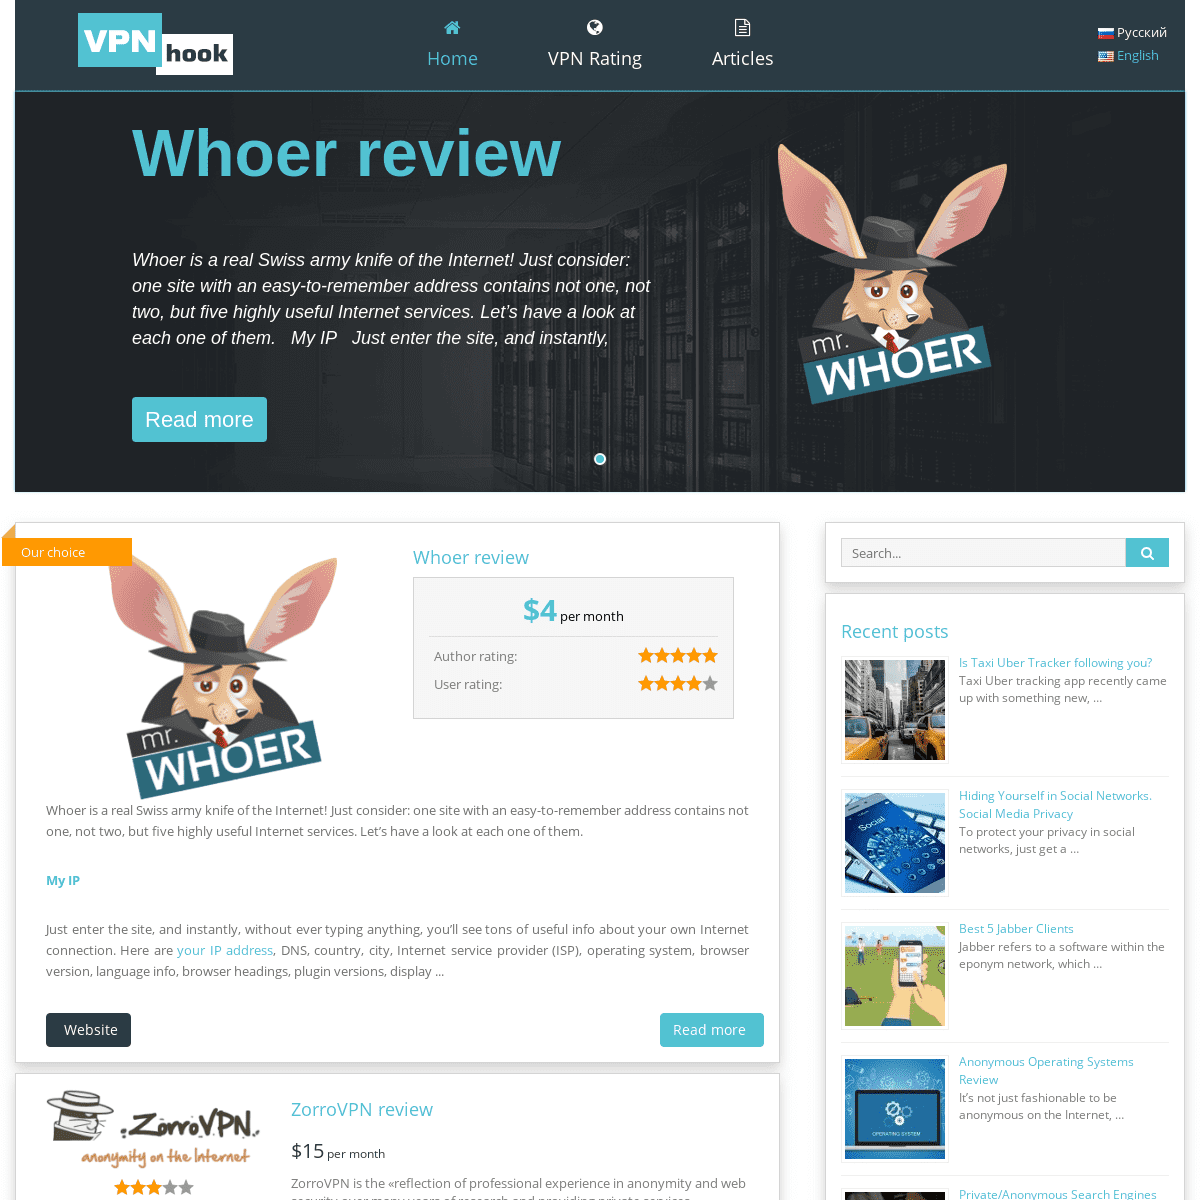 vpnhook.com | VPN Reviews, TOP VPN services. How to choose VPN? VPN top rating